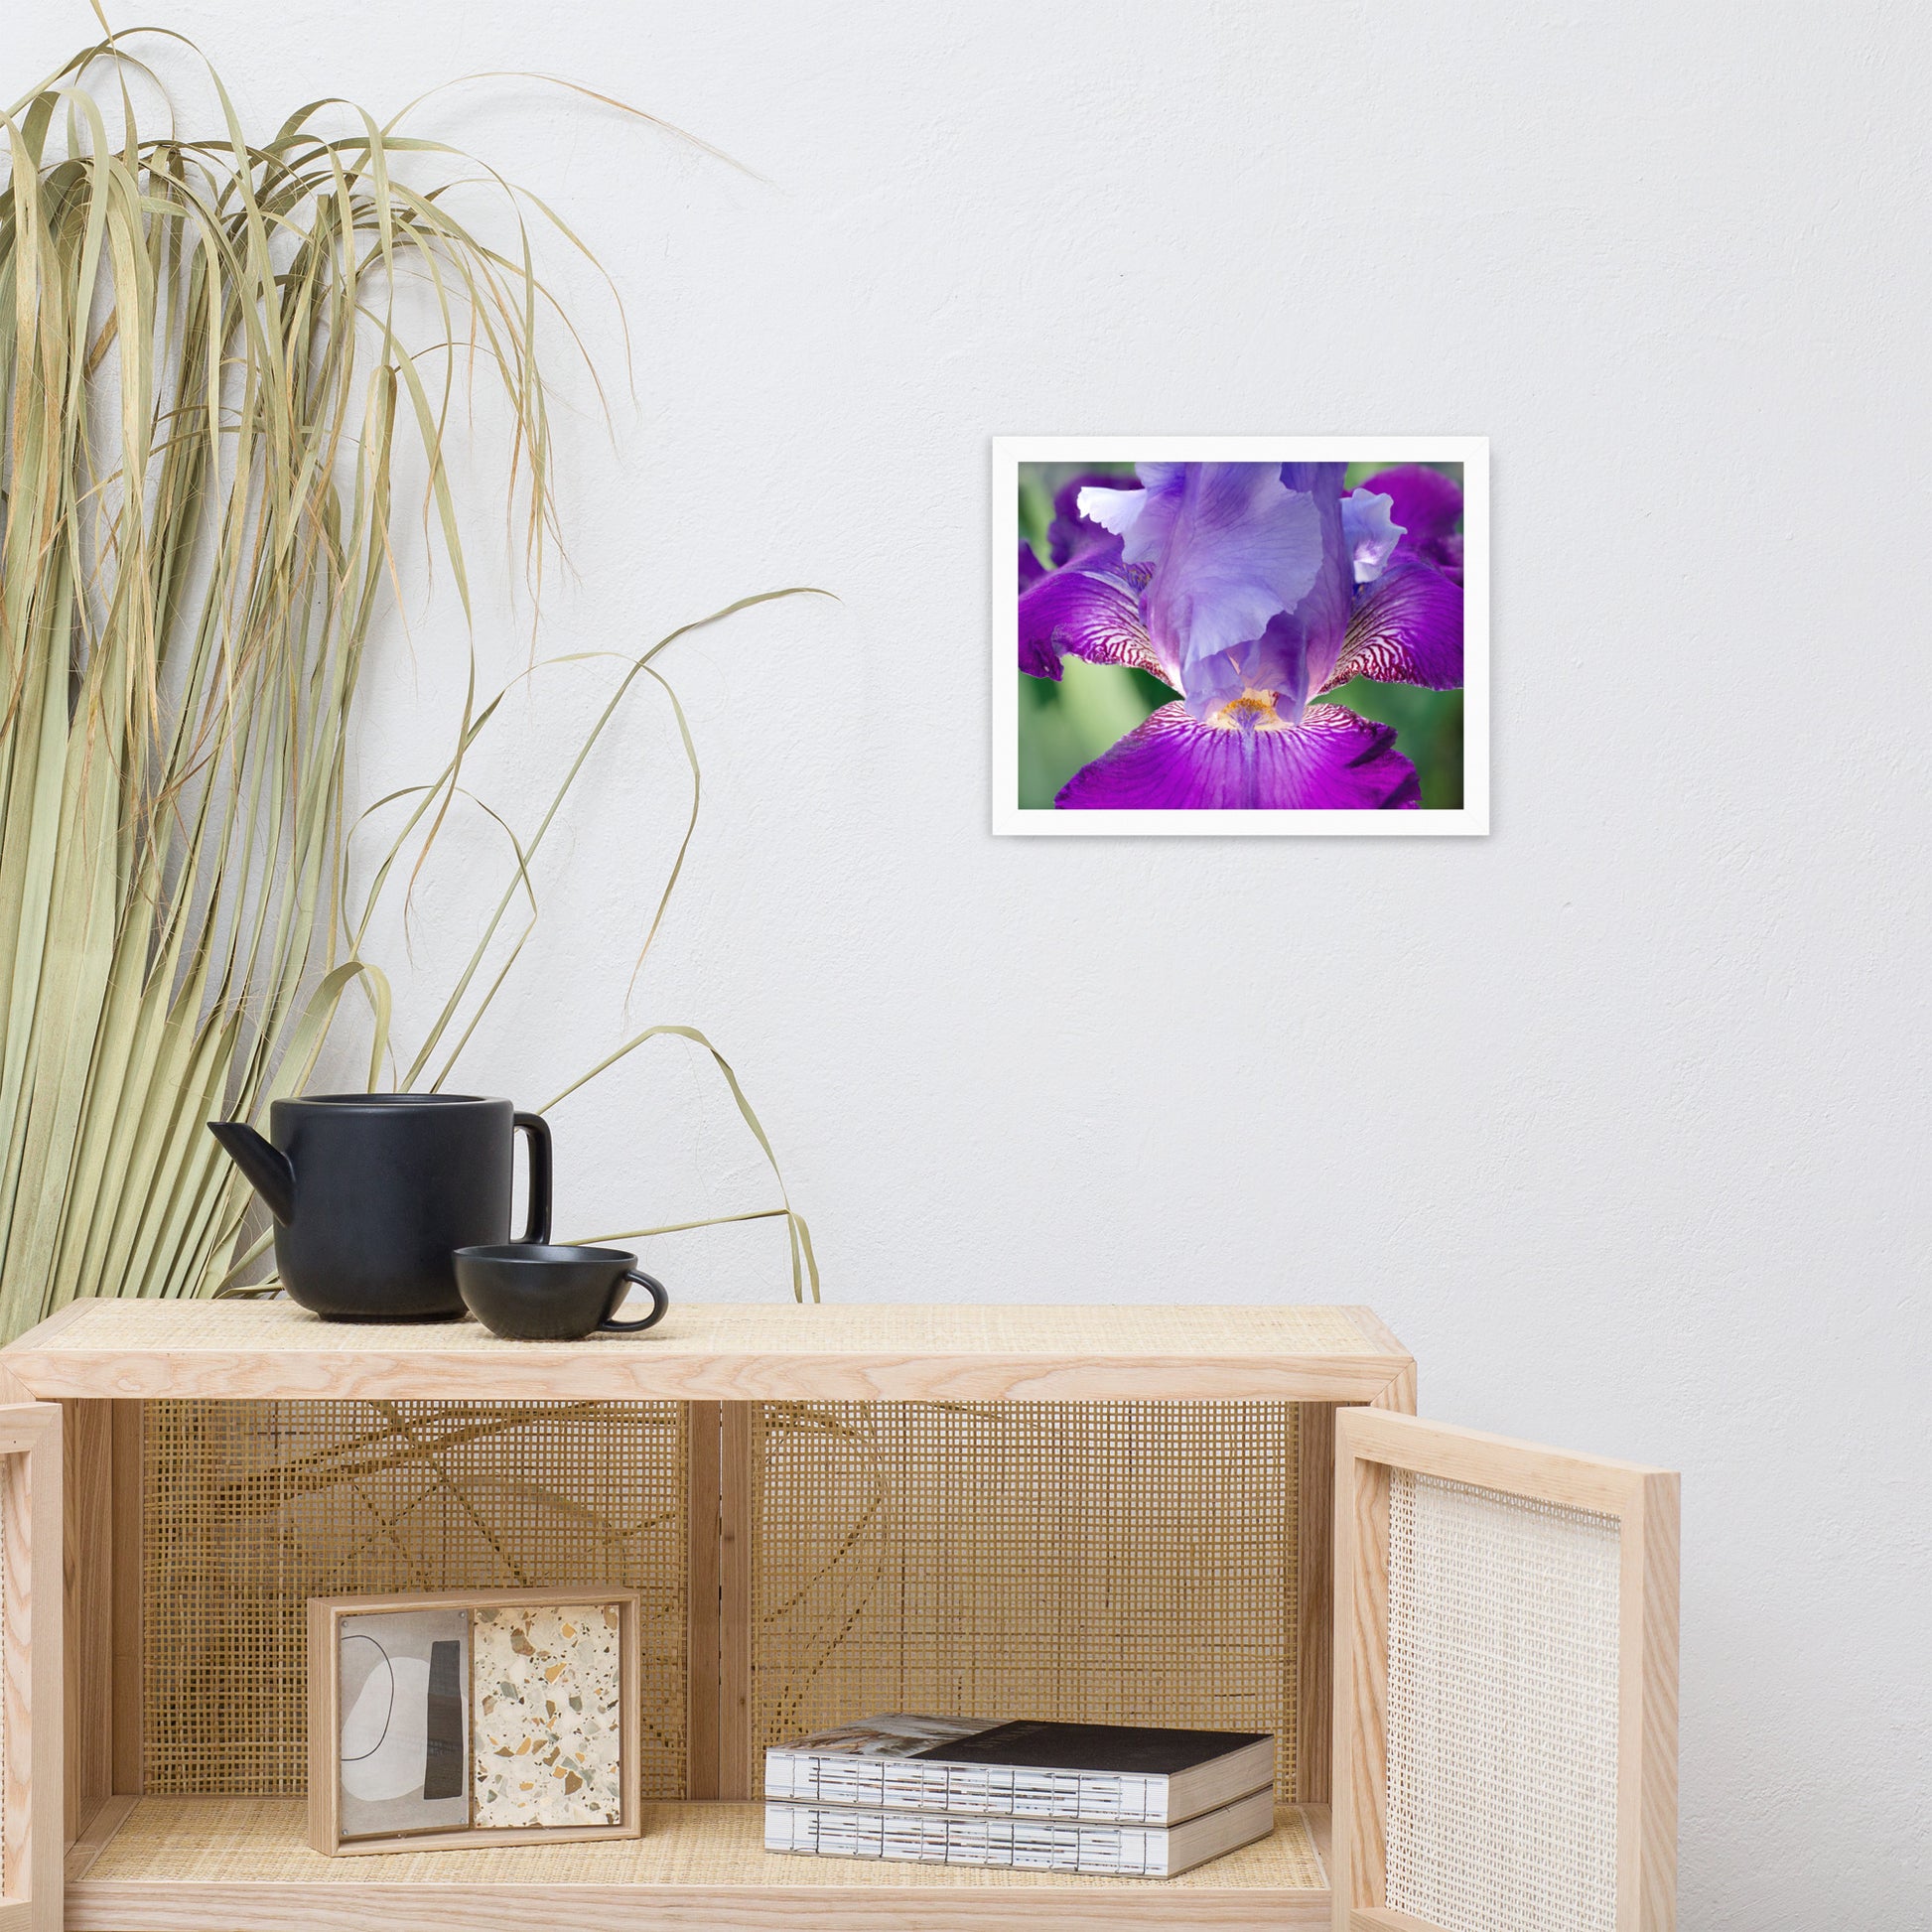 Etsy Bedroom Art: Glowing Iris - Floral / Botanical / Nature Photo Framed Wall Art Print - Artwork - Wall Decor - Modern Home Decor